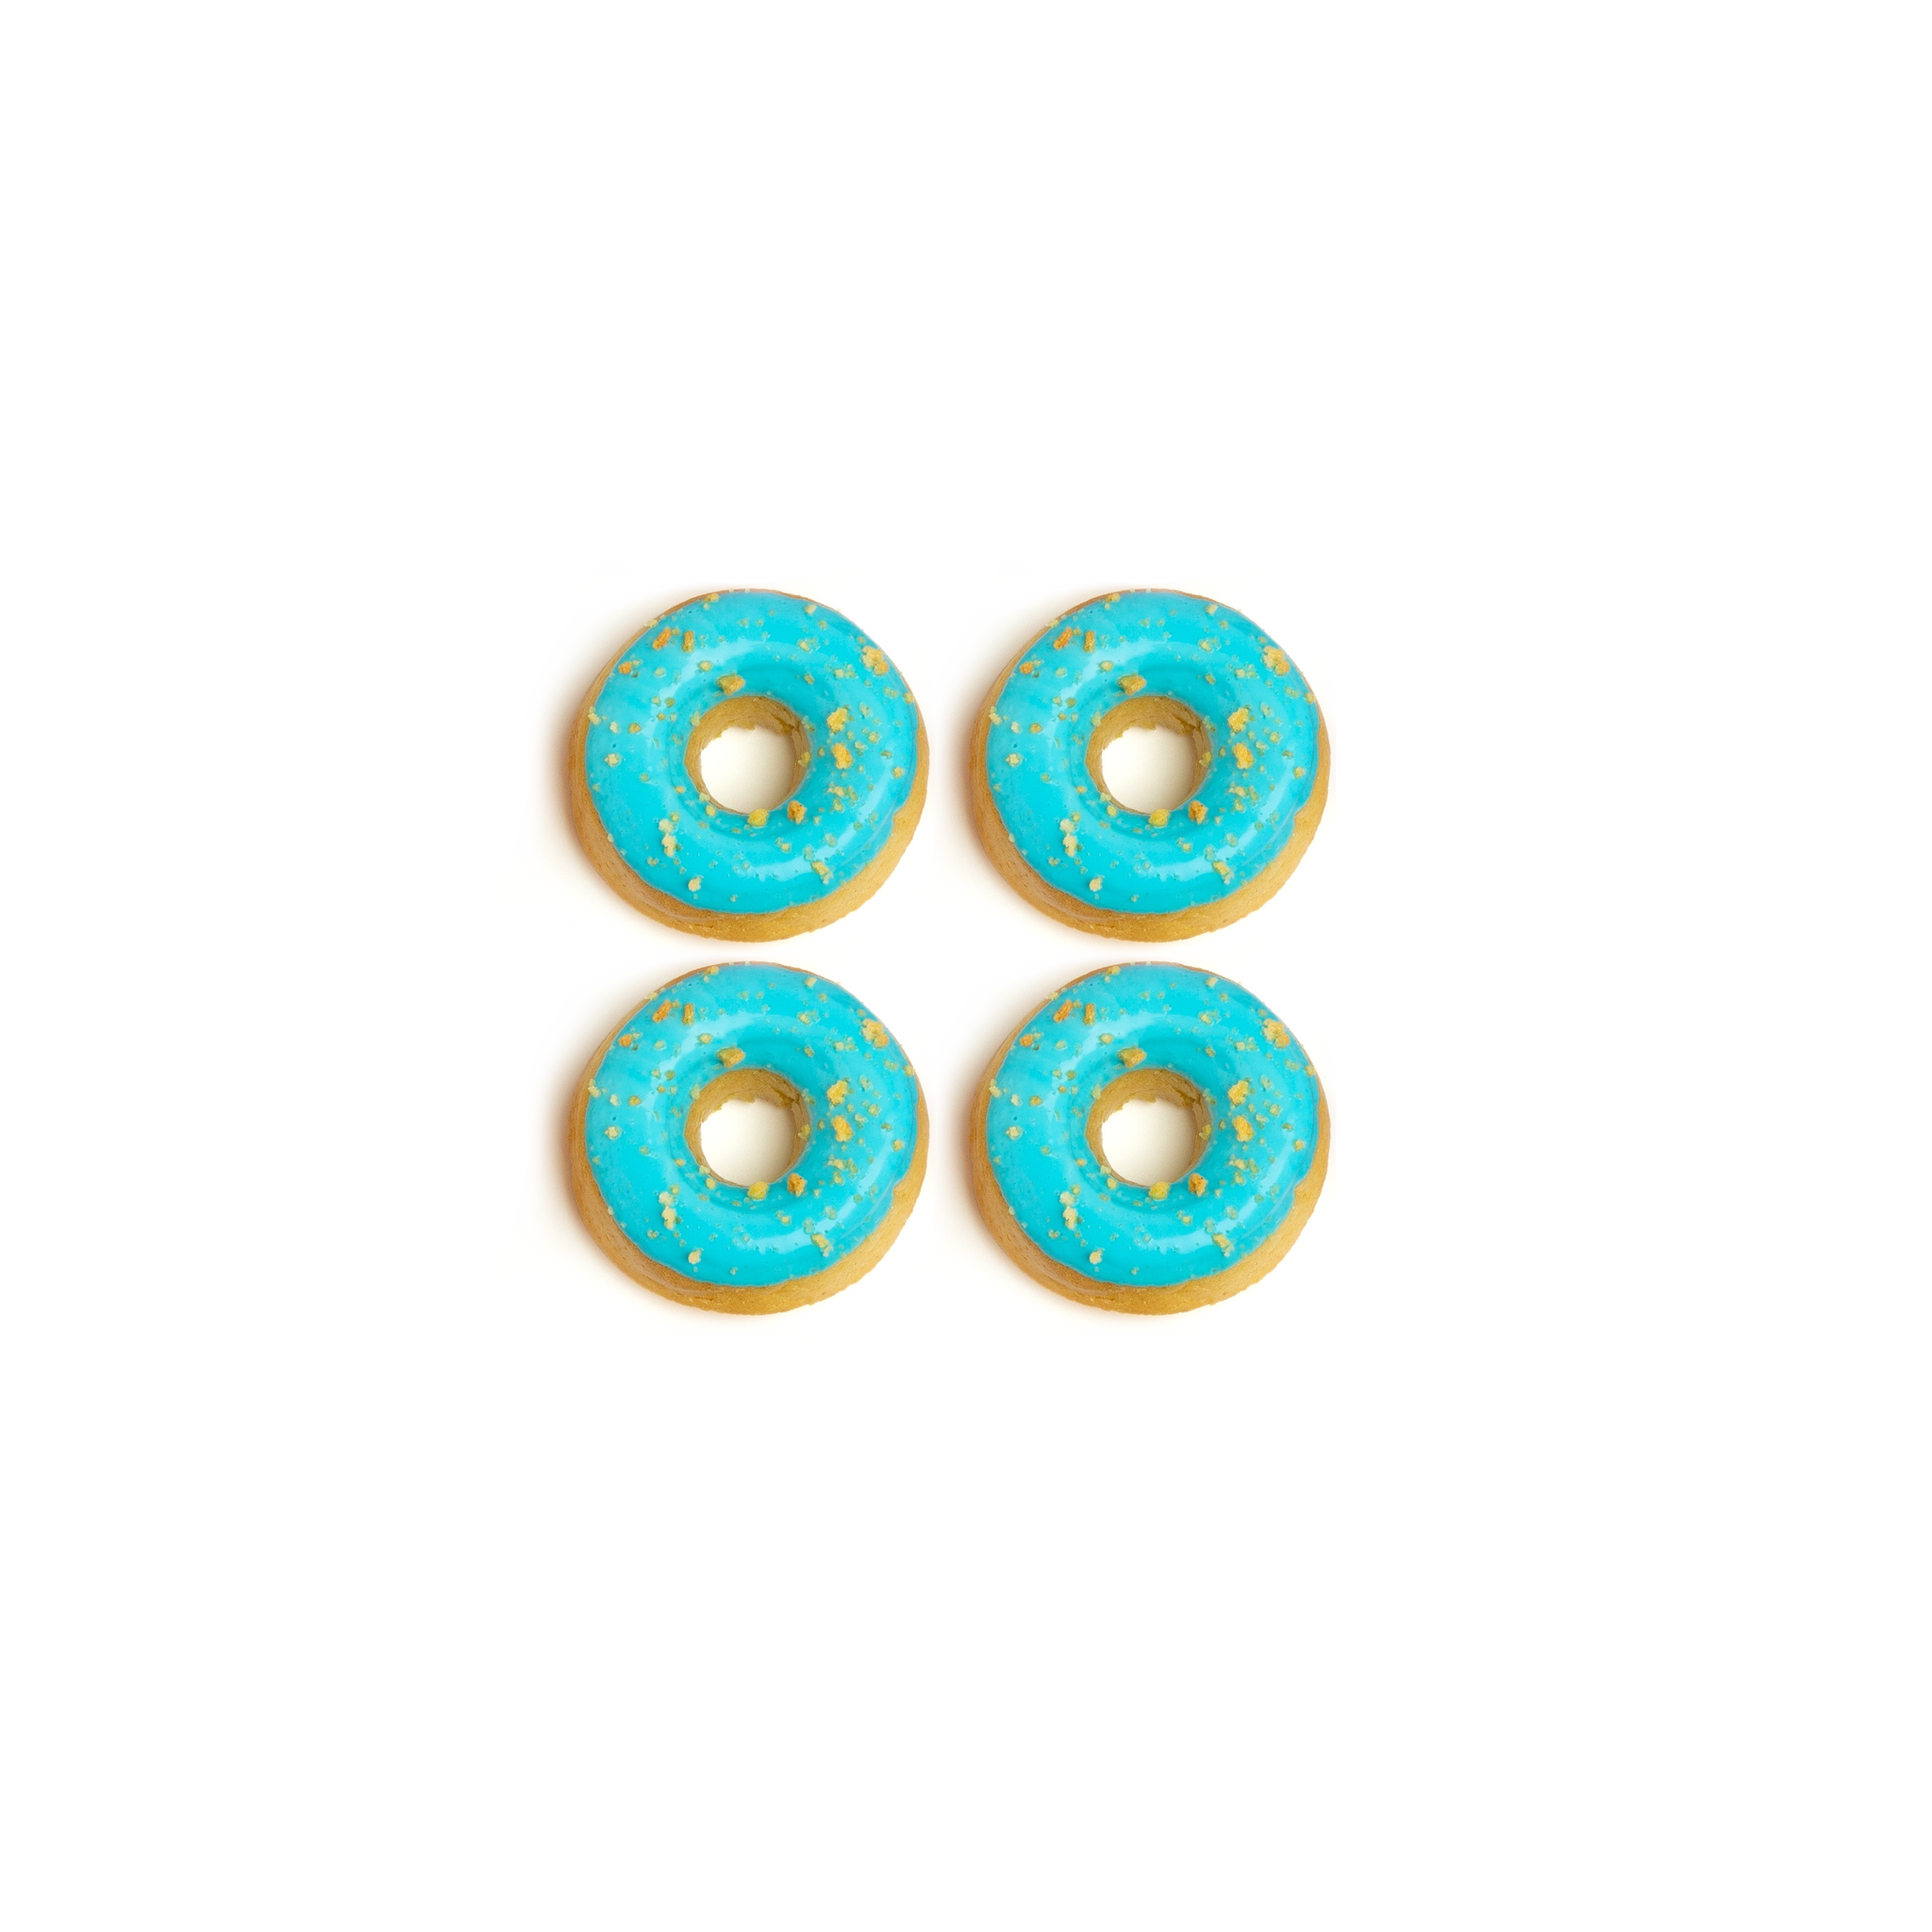 Donuts (4 pcs) - Single Color